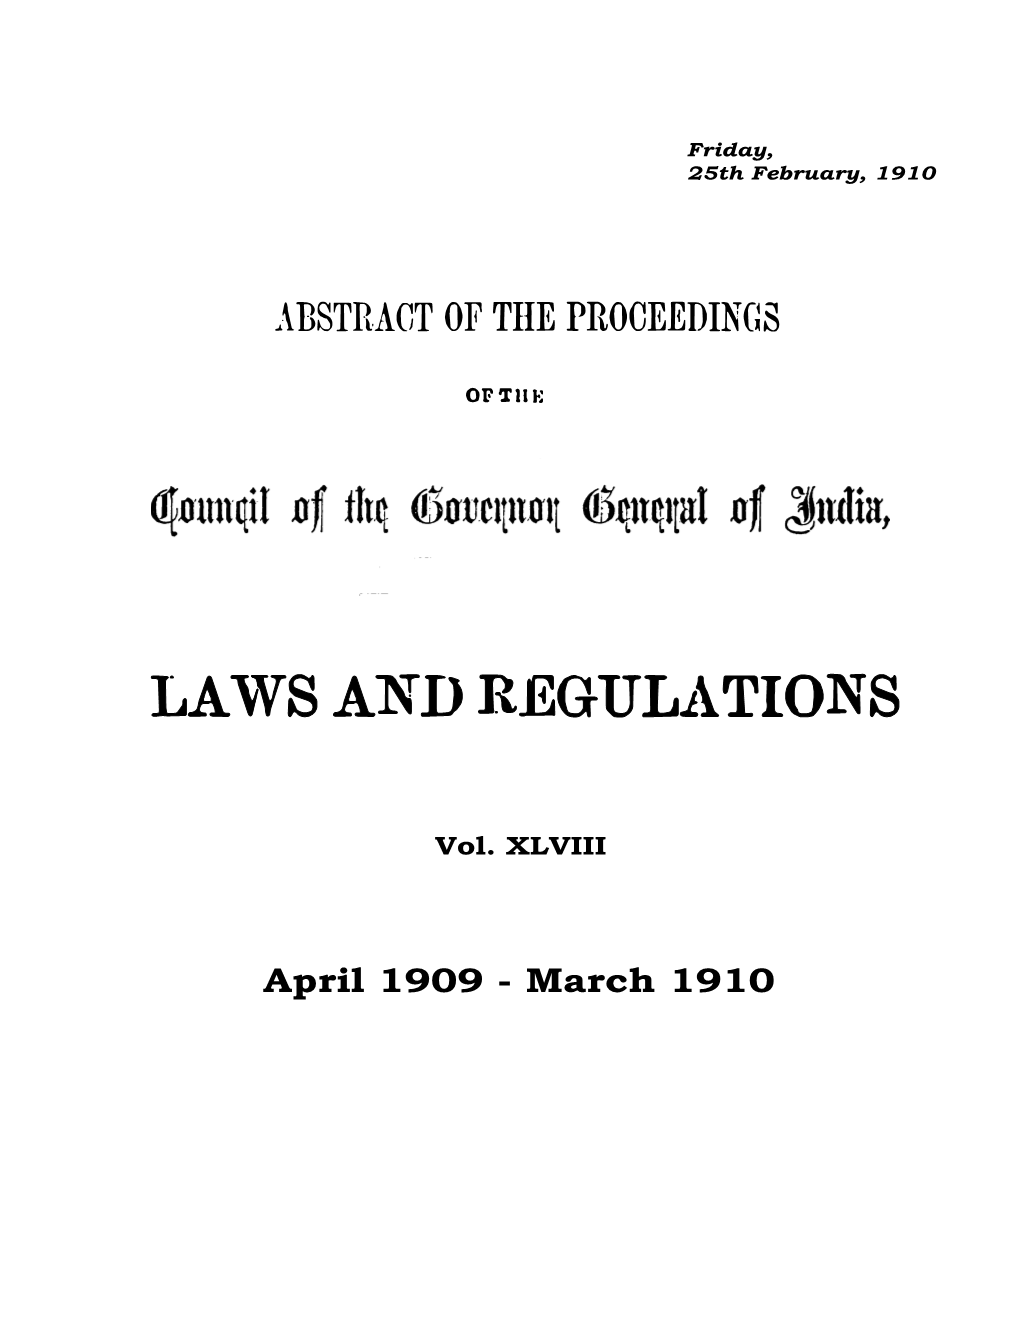 La"\Vs and Regulations